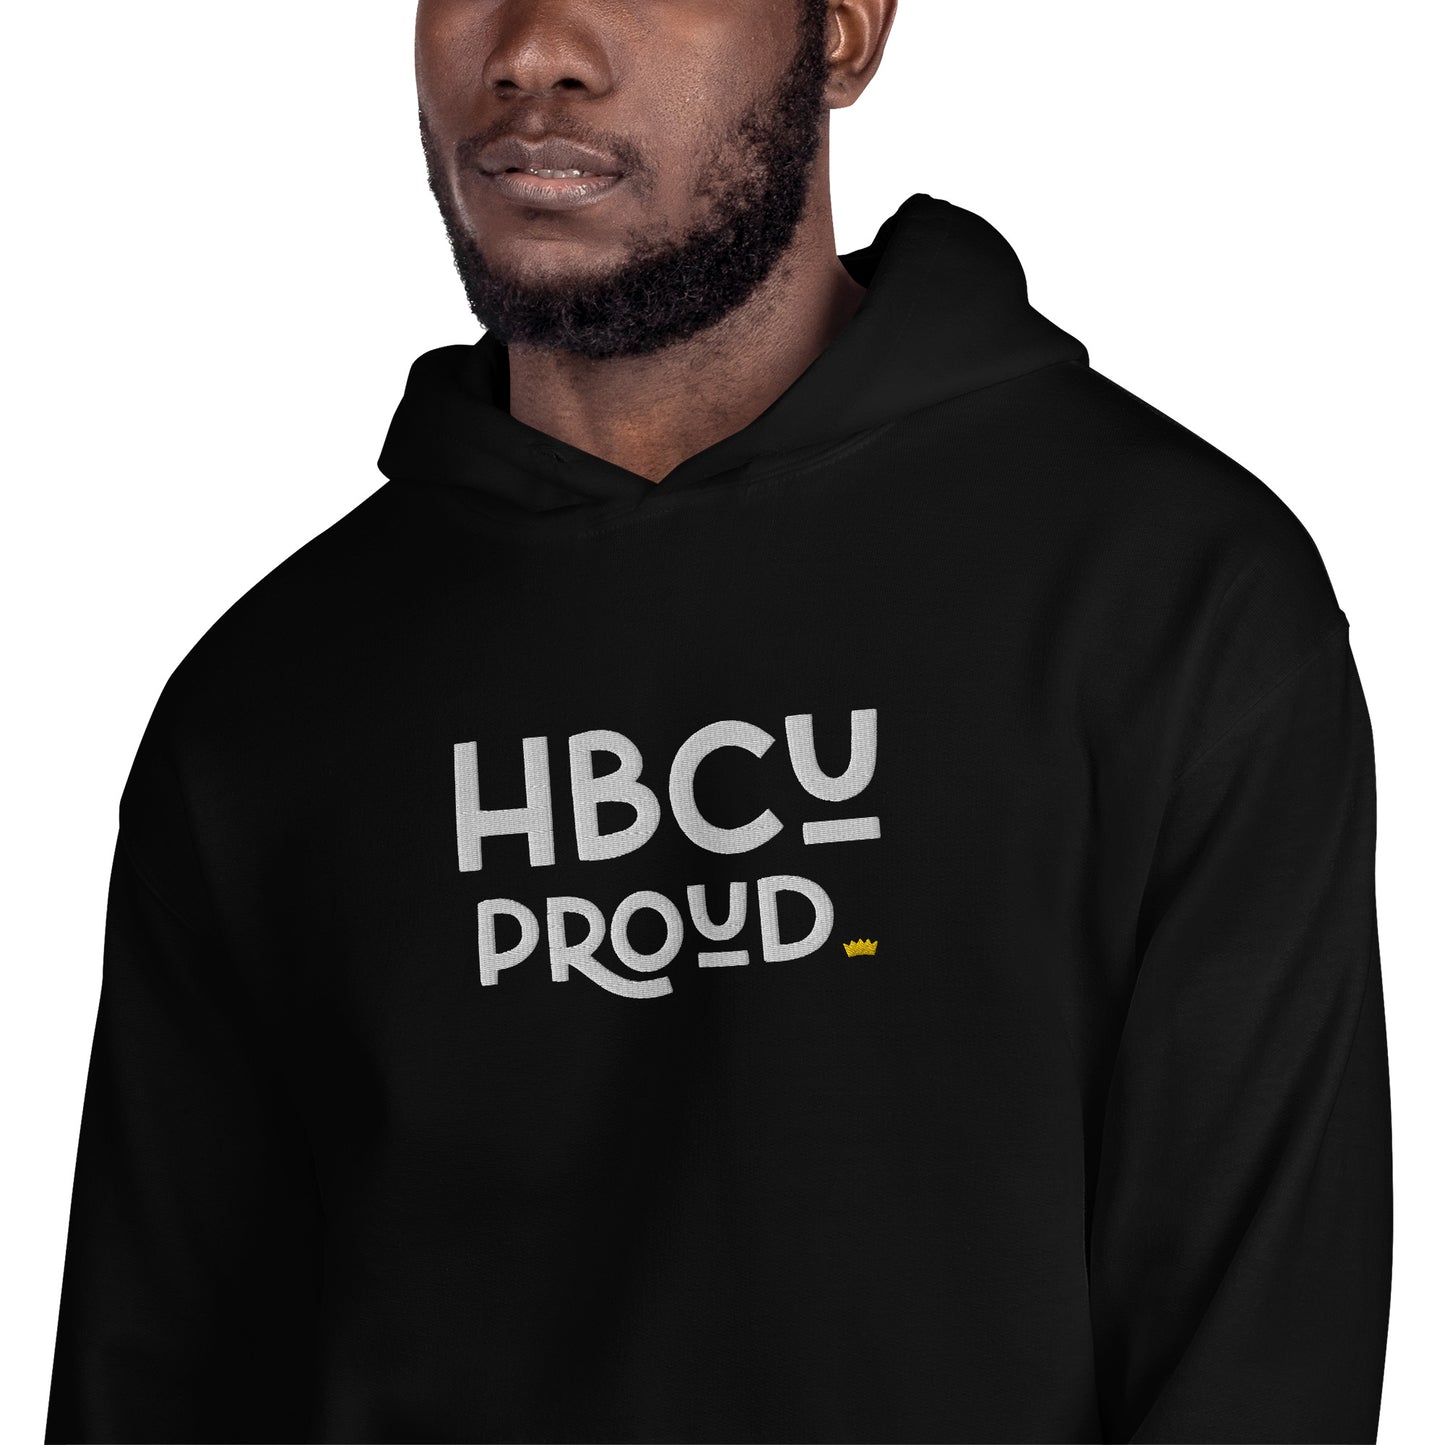 Proud - HBCU Embroidered Unisex Hoodie